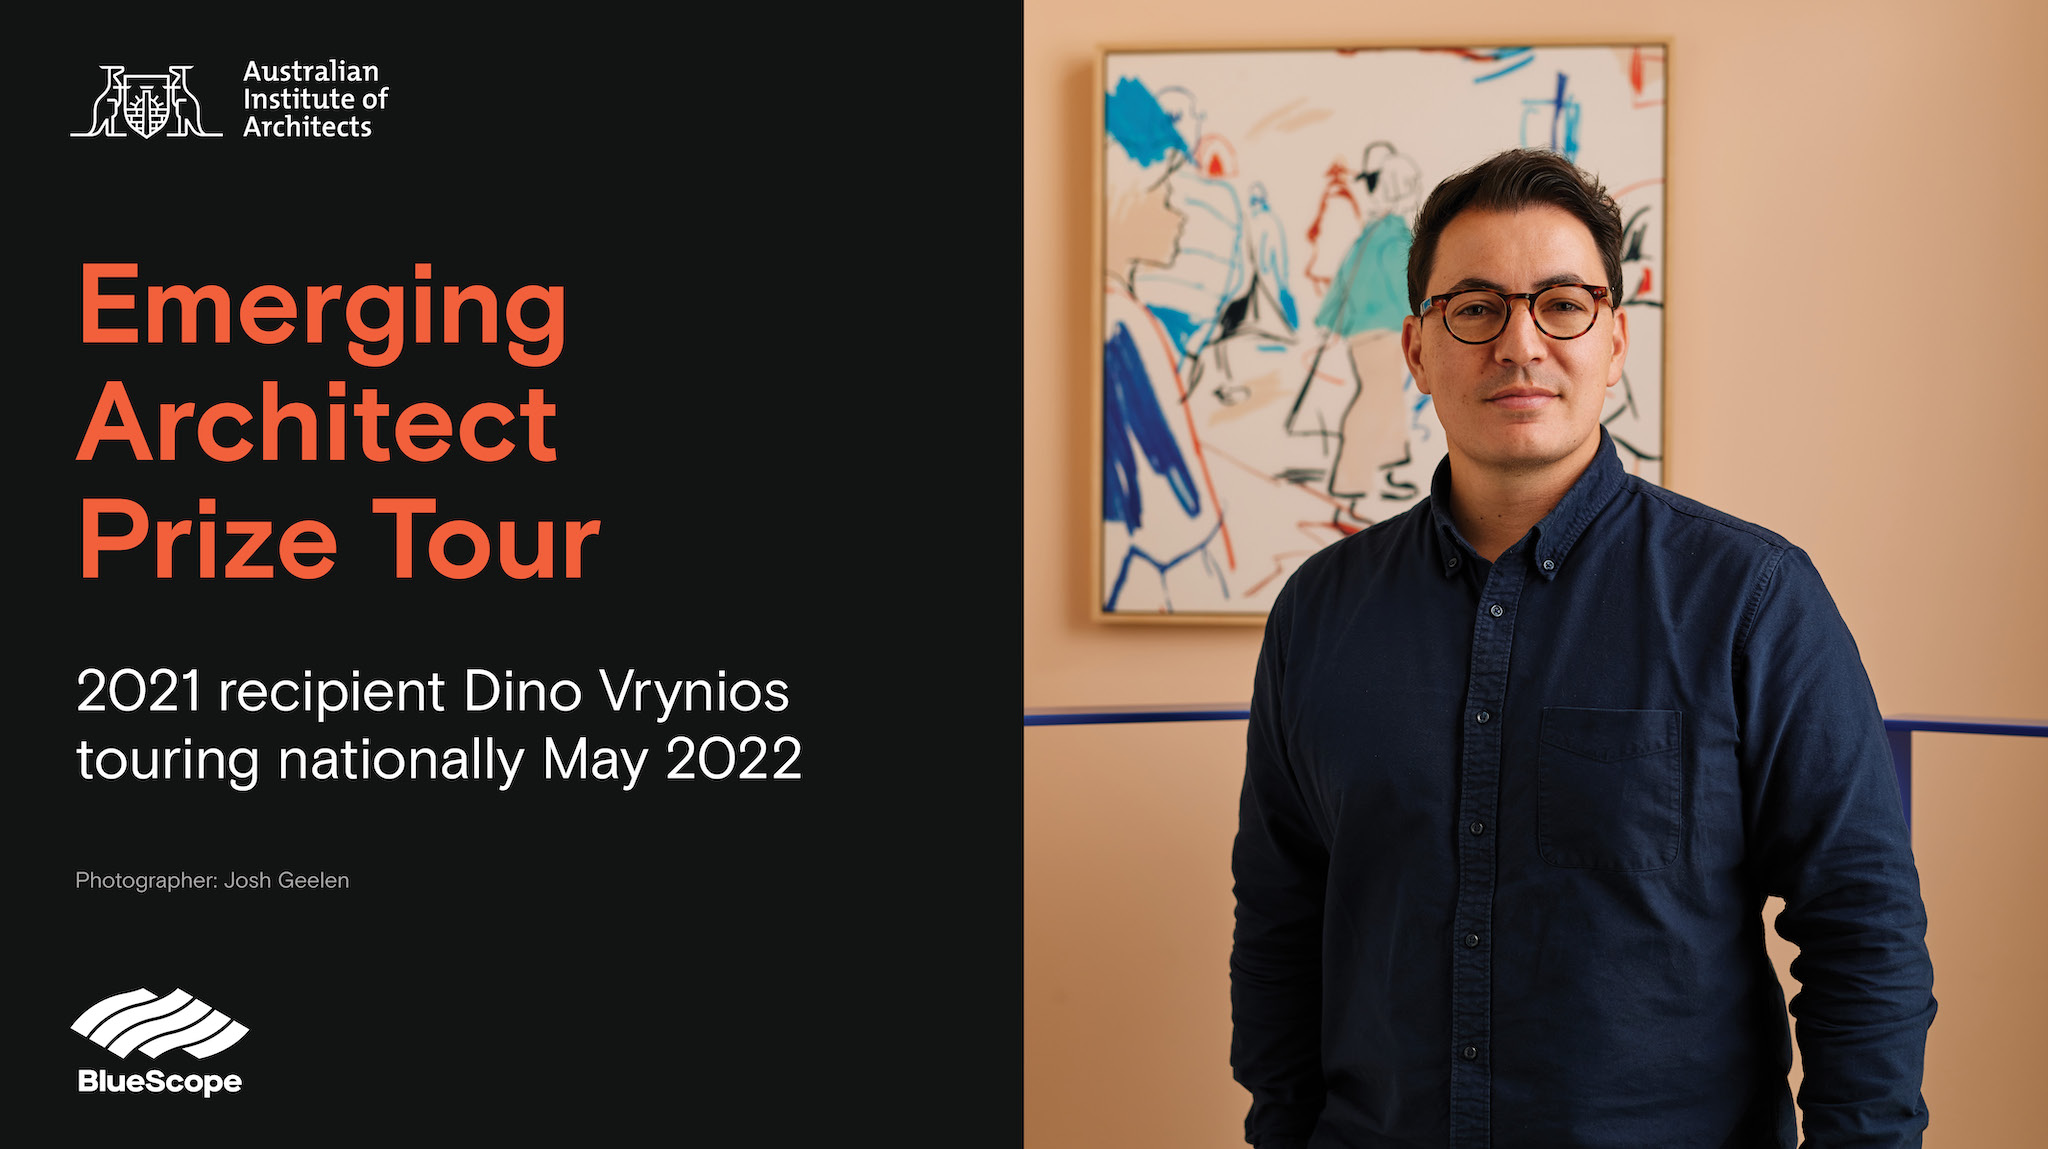 TAS - Emerging Architect Prize Tour with Dino Vrynios